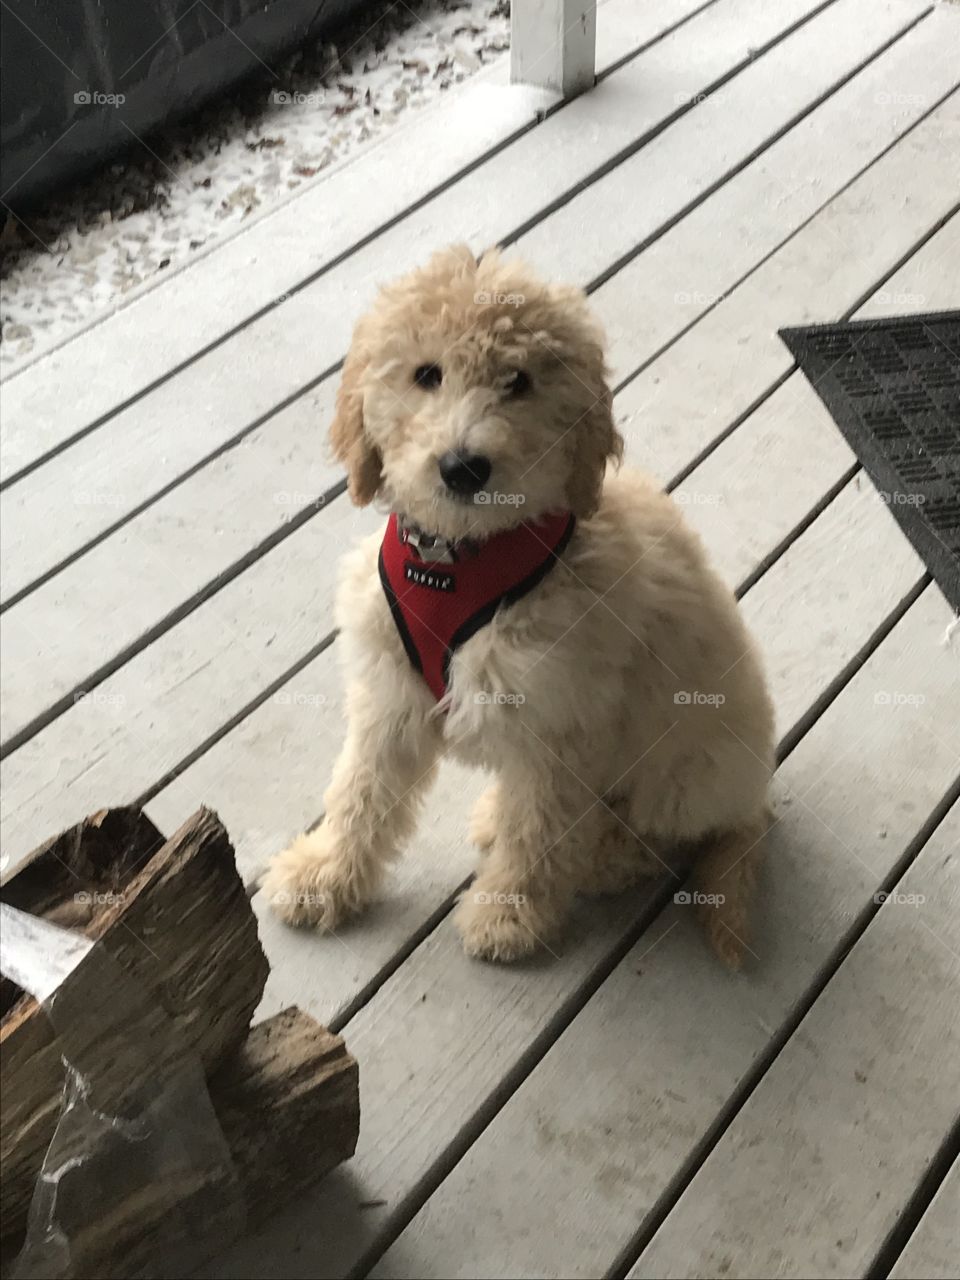 Puppy wants firewood